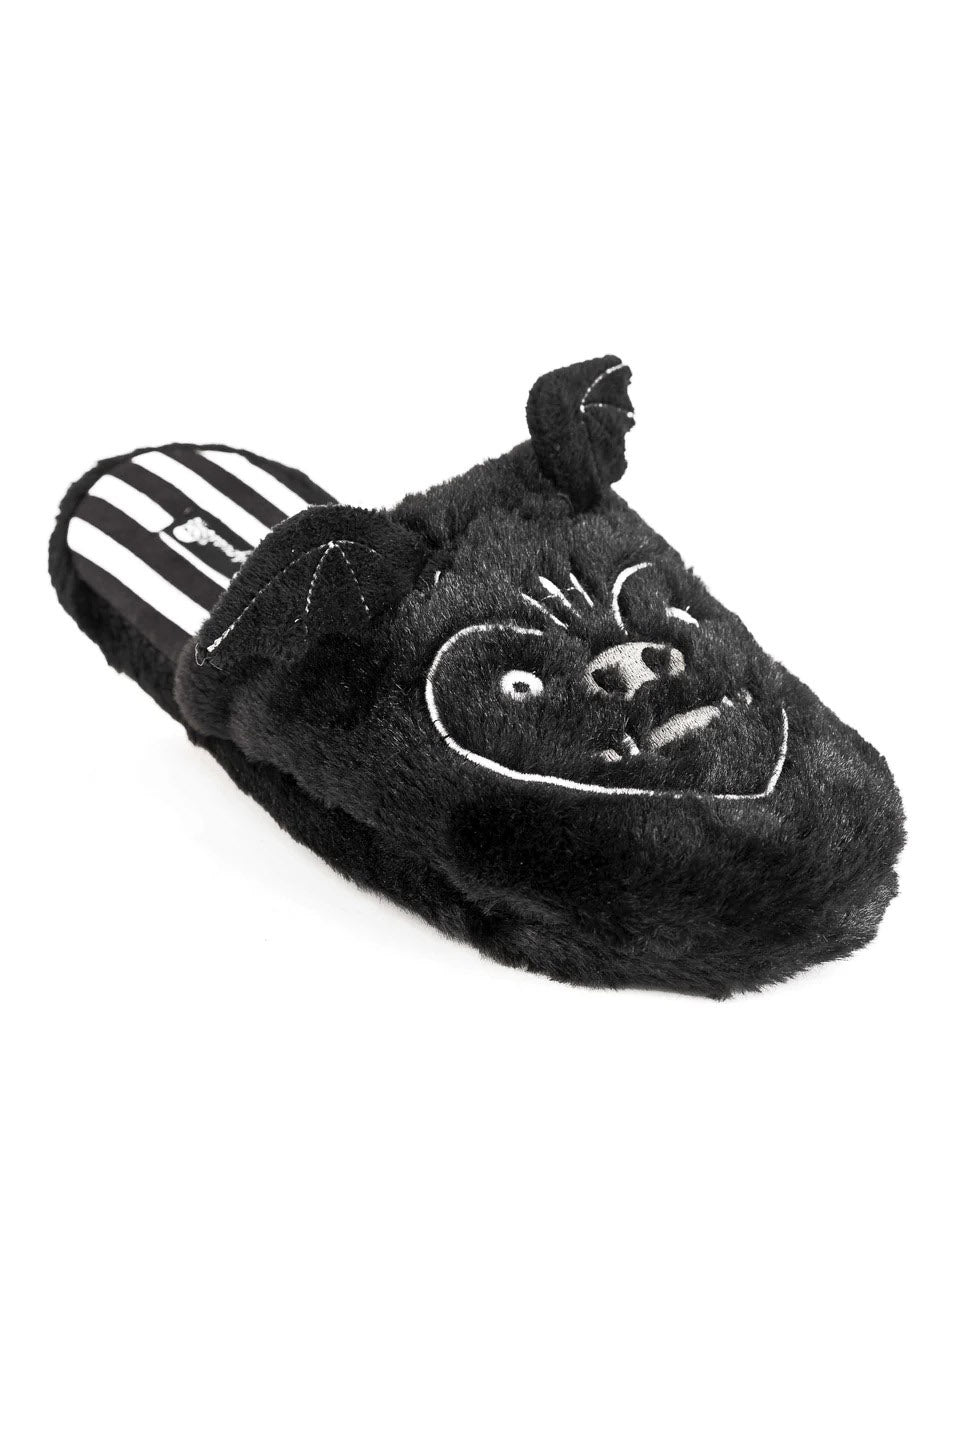 Furry Bat Slippers